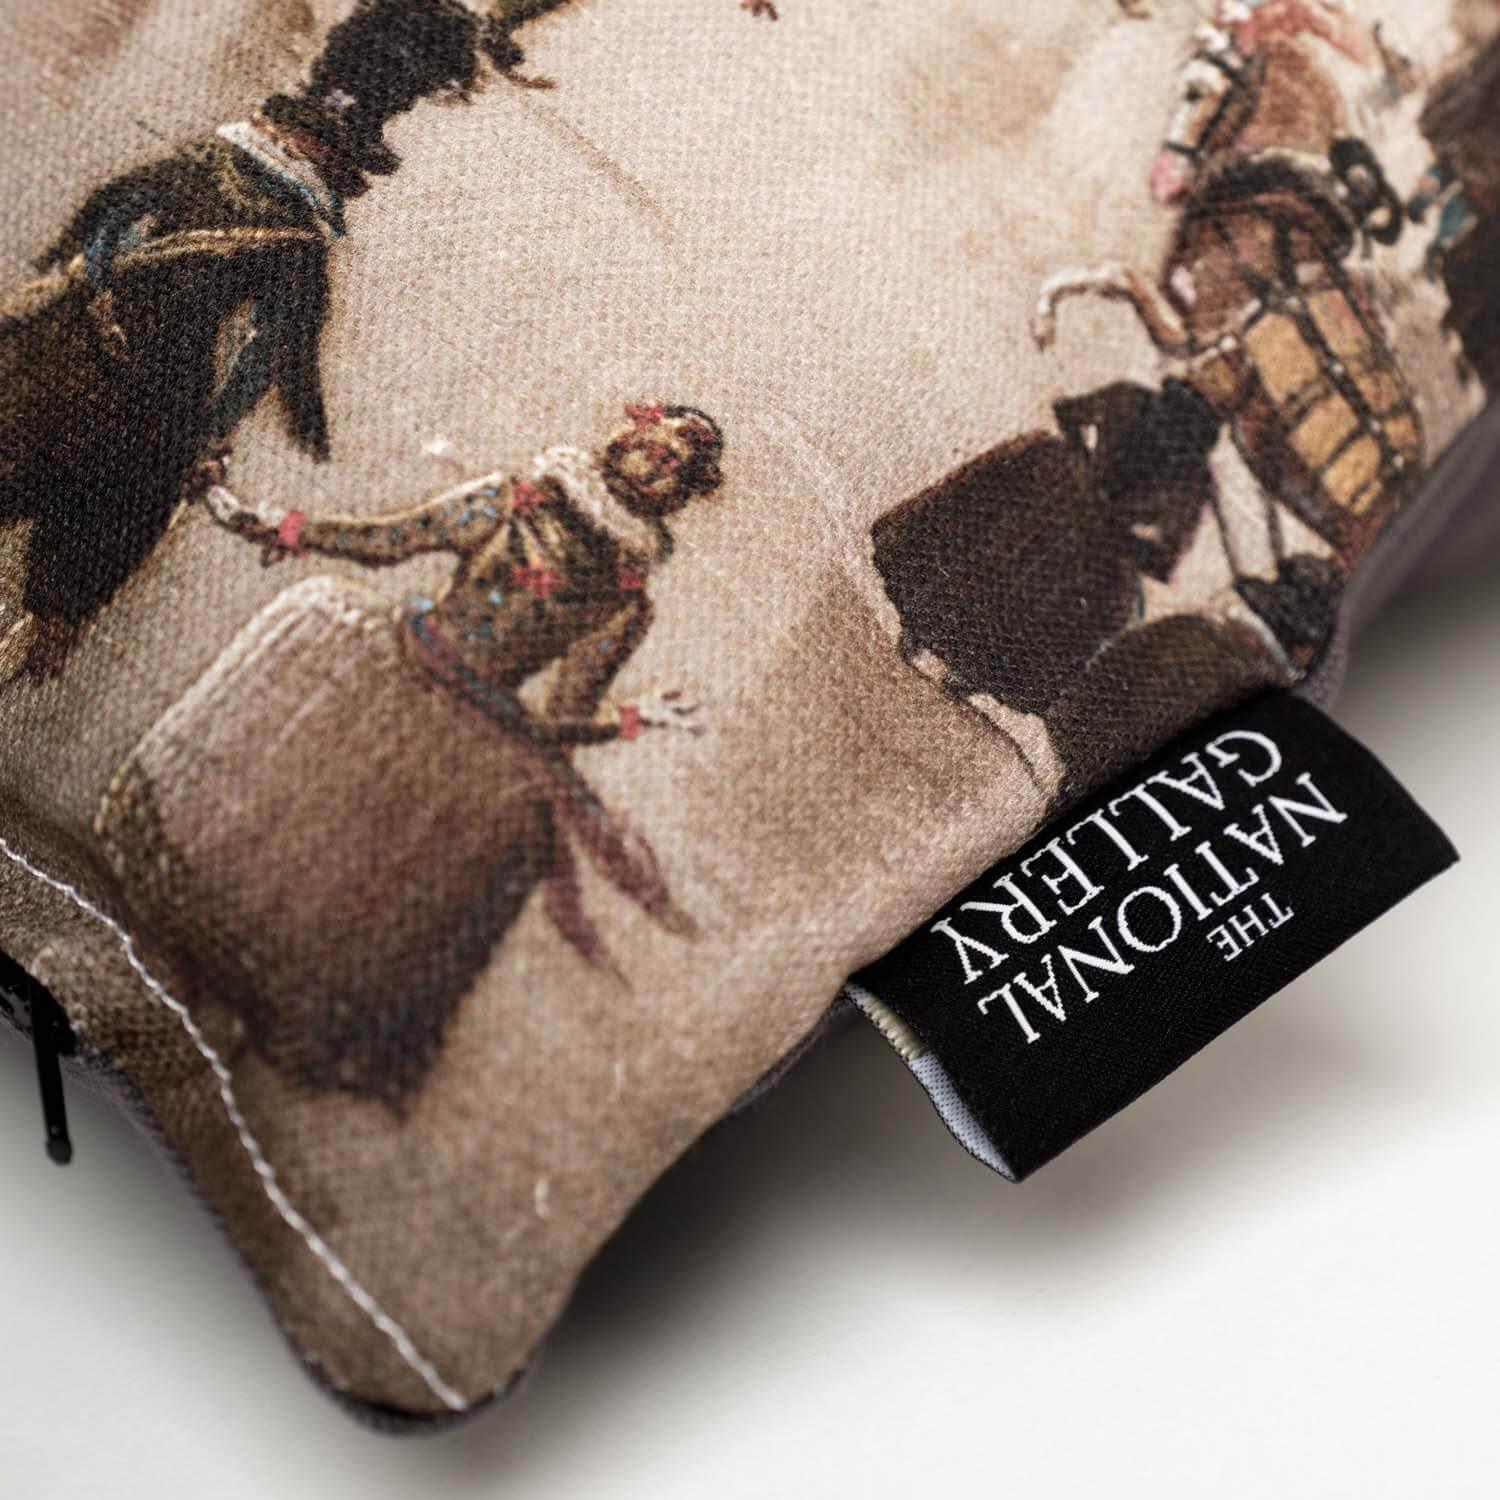 The Umbrellas - Pierre-Auguste Renoir - National Gallery Cushion - Handmade Cushions UK - WeLoveCushions